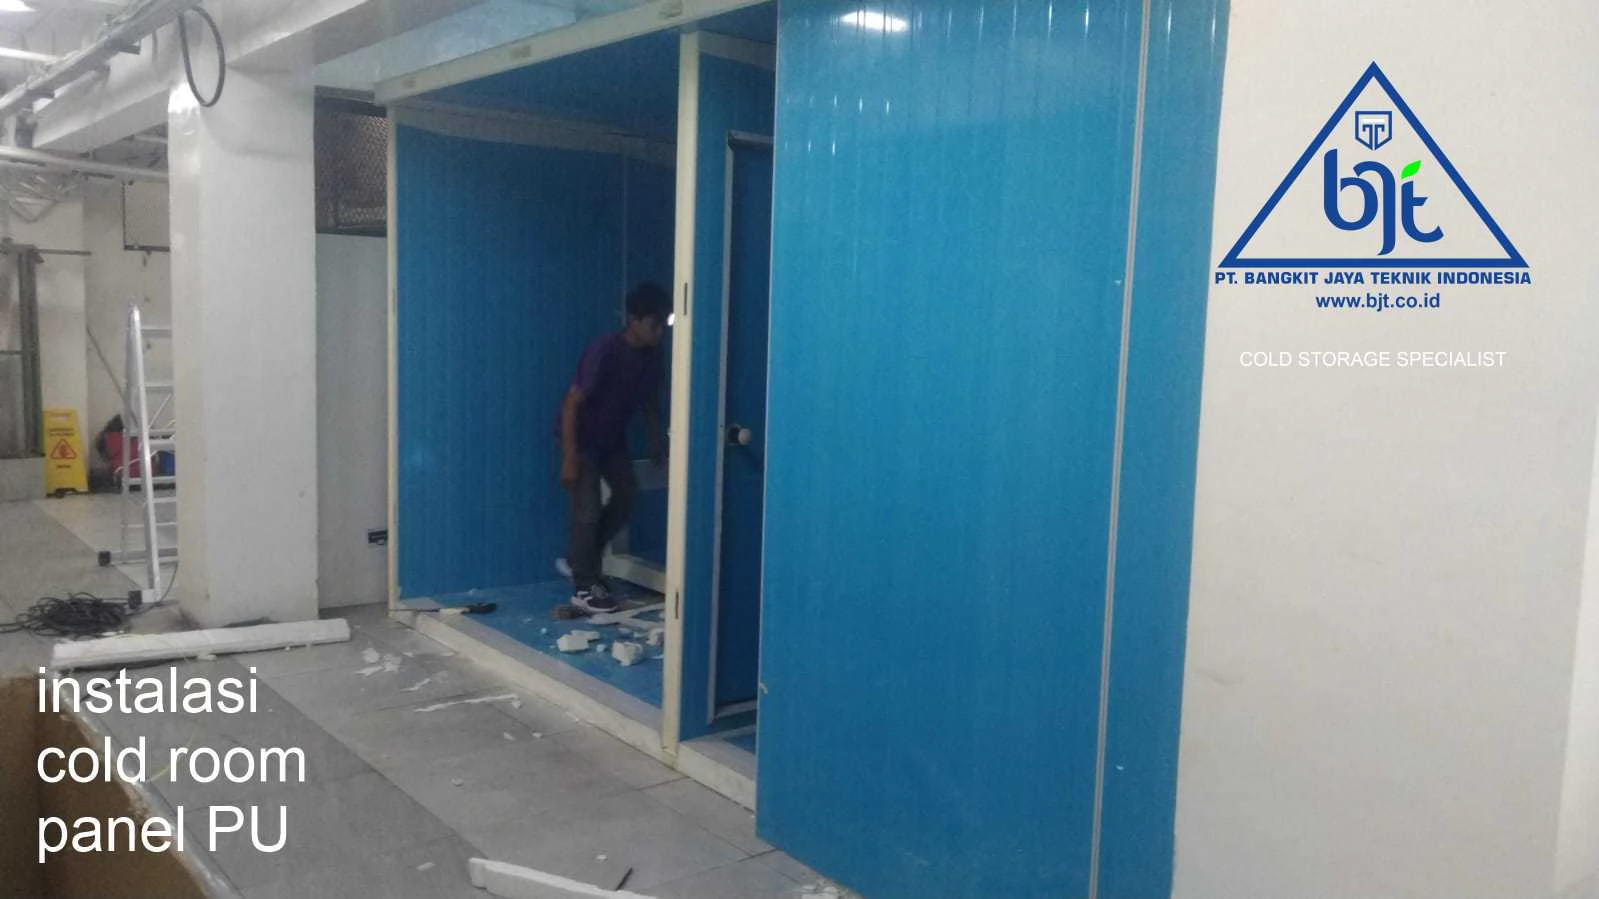 Kepoin PT. Bangkit Jaya Teknik Indonesia: Tempat Nyari Cold Room Storage Keren Abis!